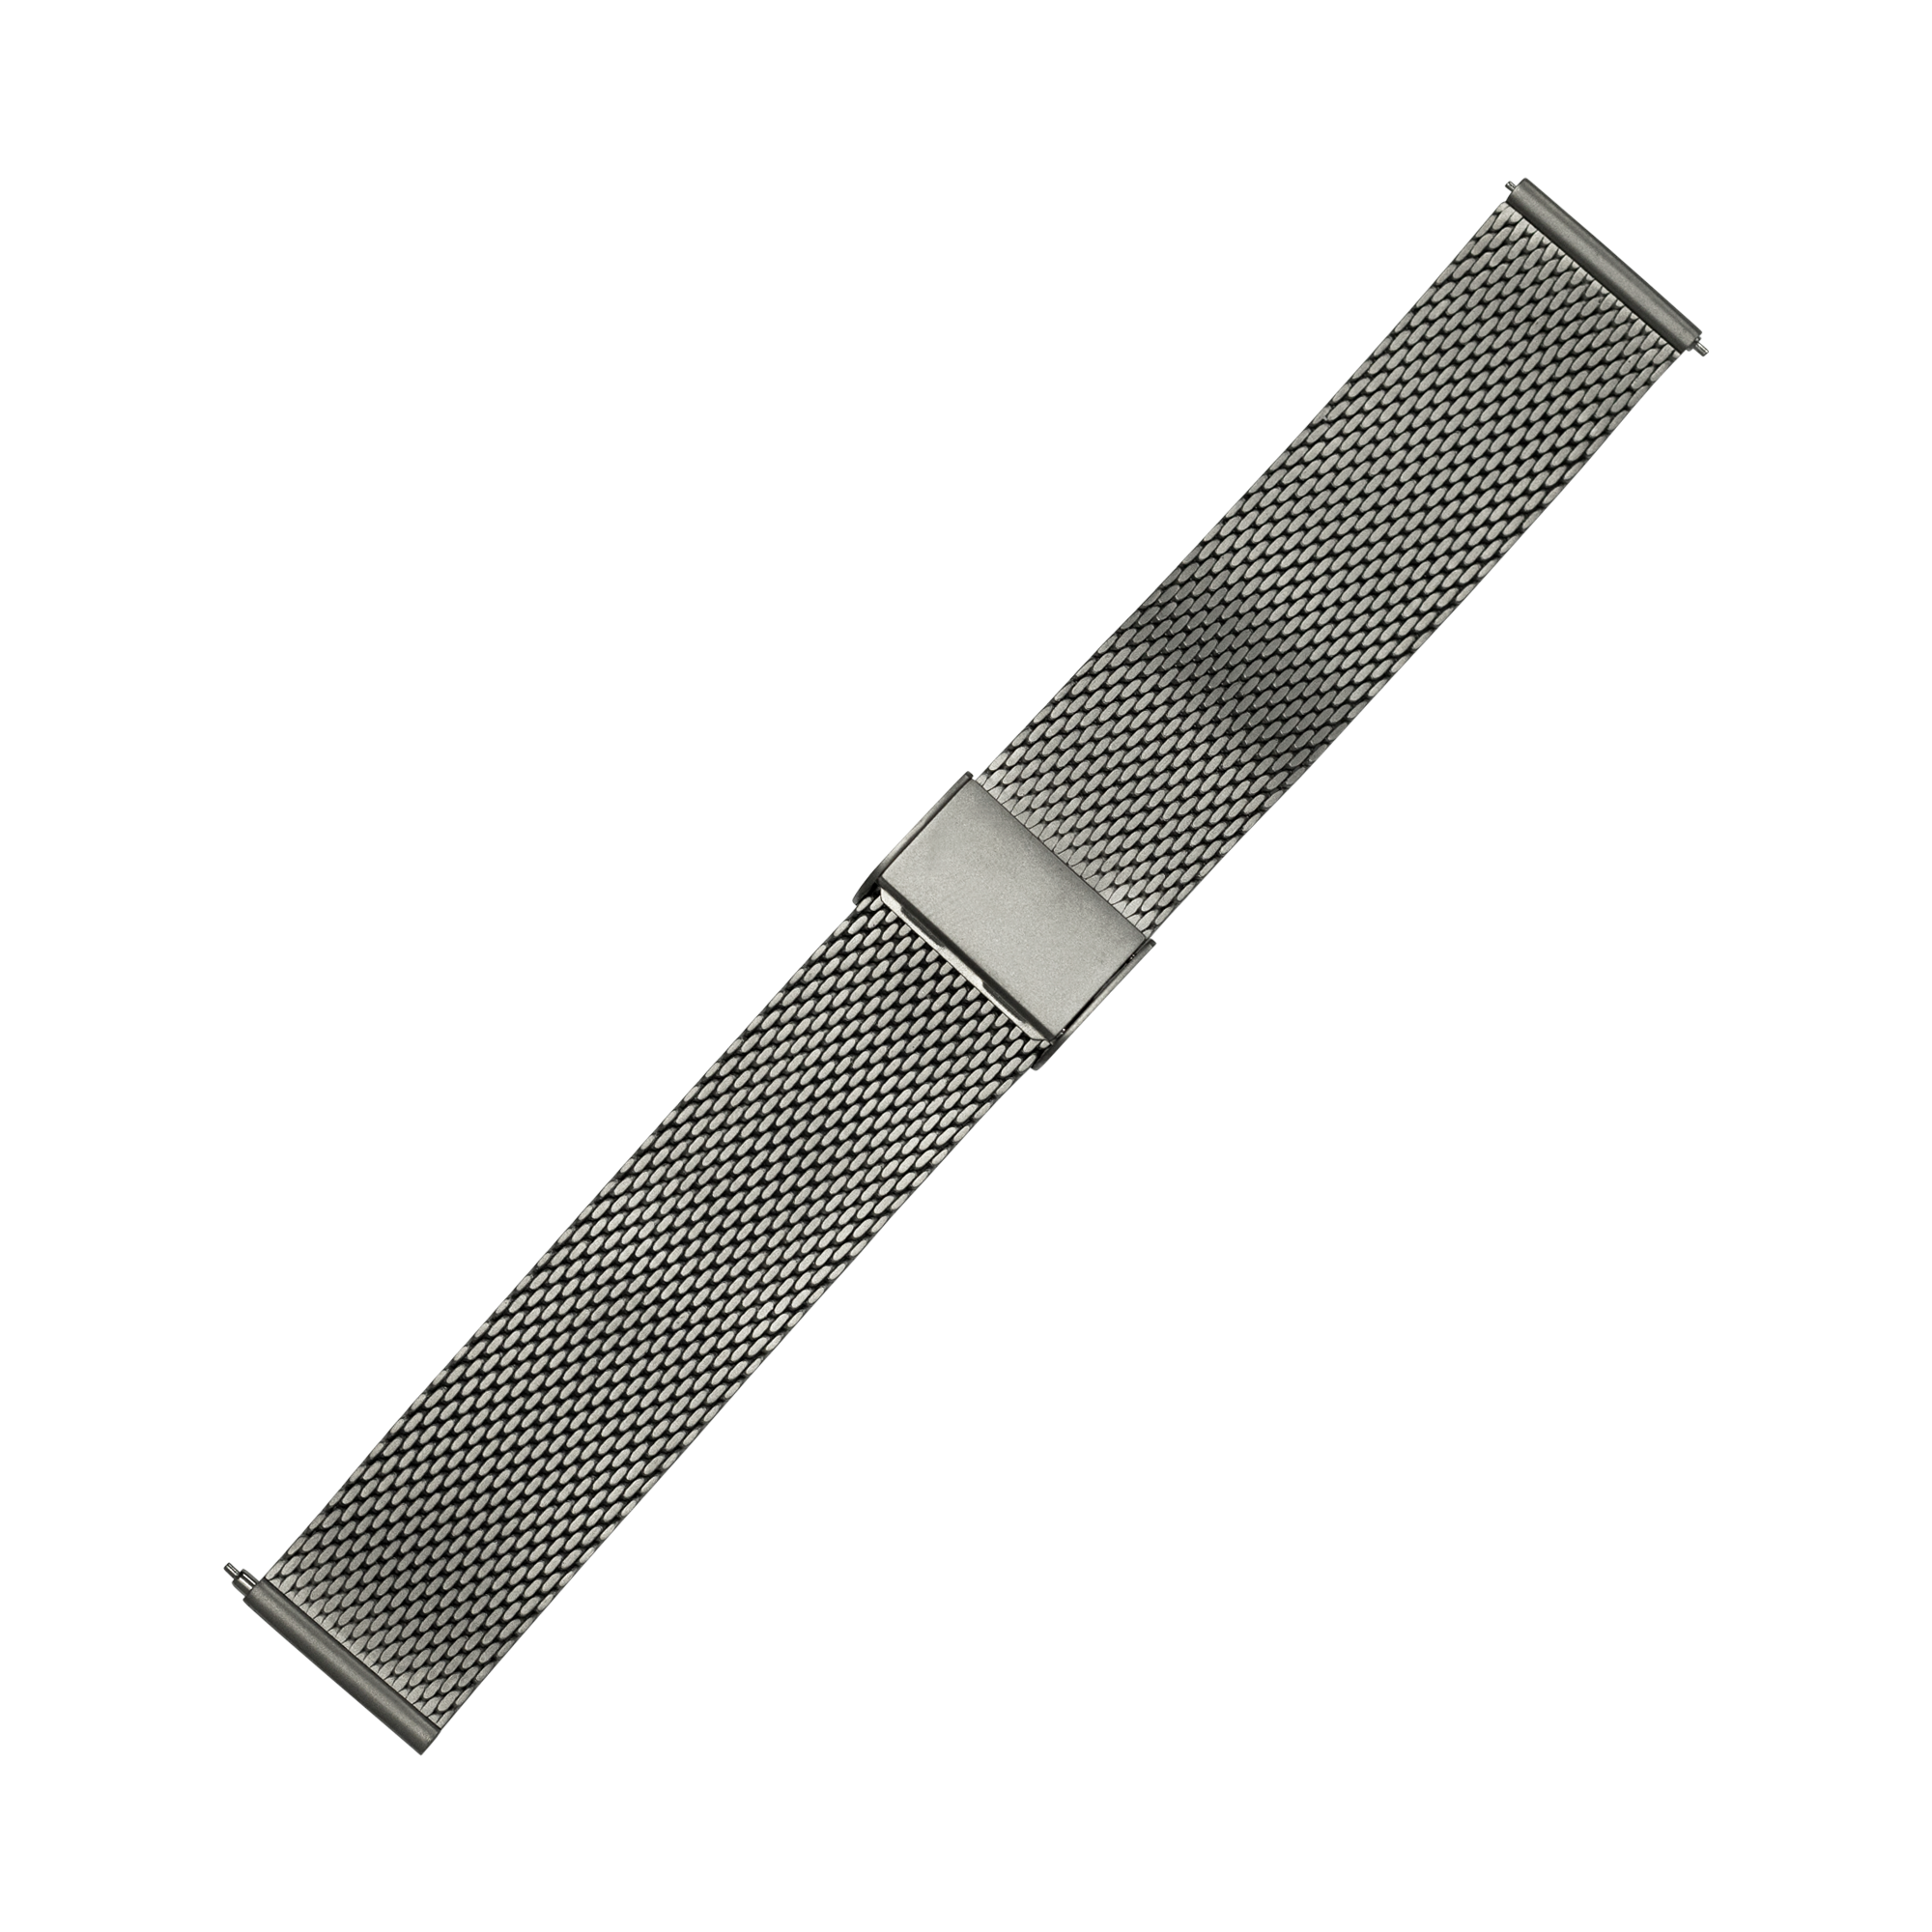 [Apple Watch] Titanium Feather-Lite Mesh Bracelet